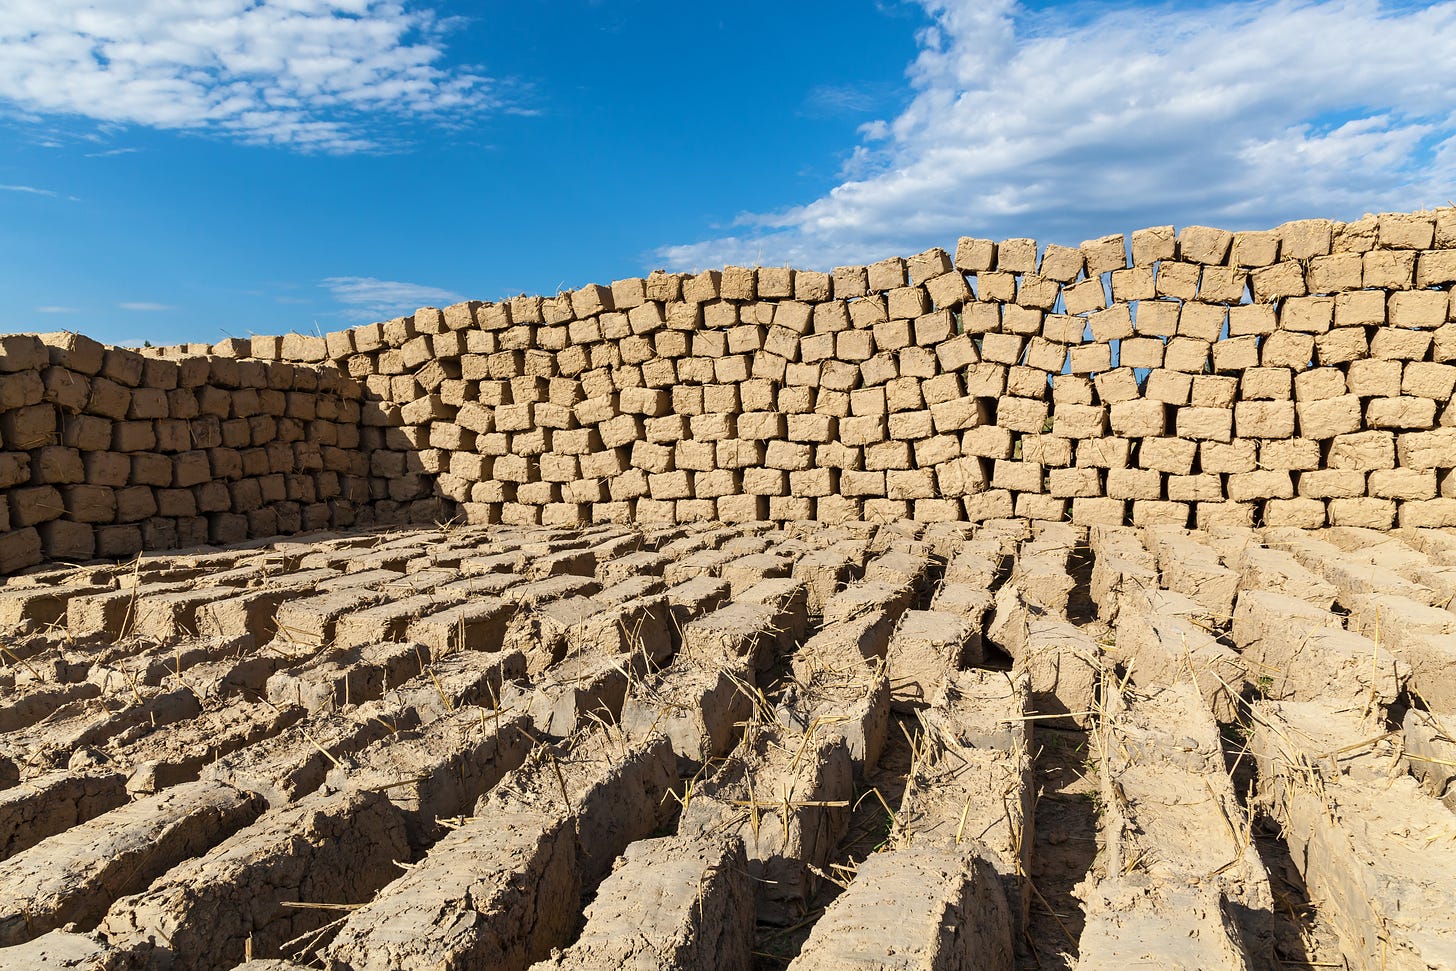 Bricks of mud and straw piled up